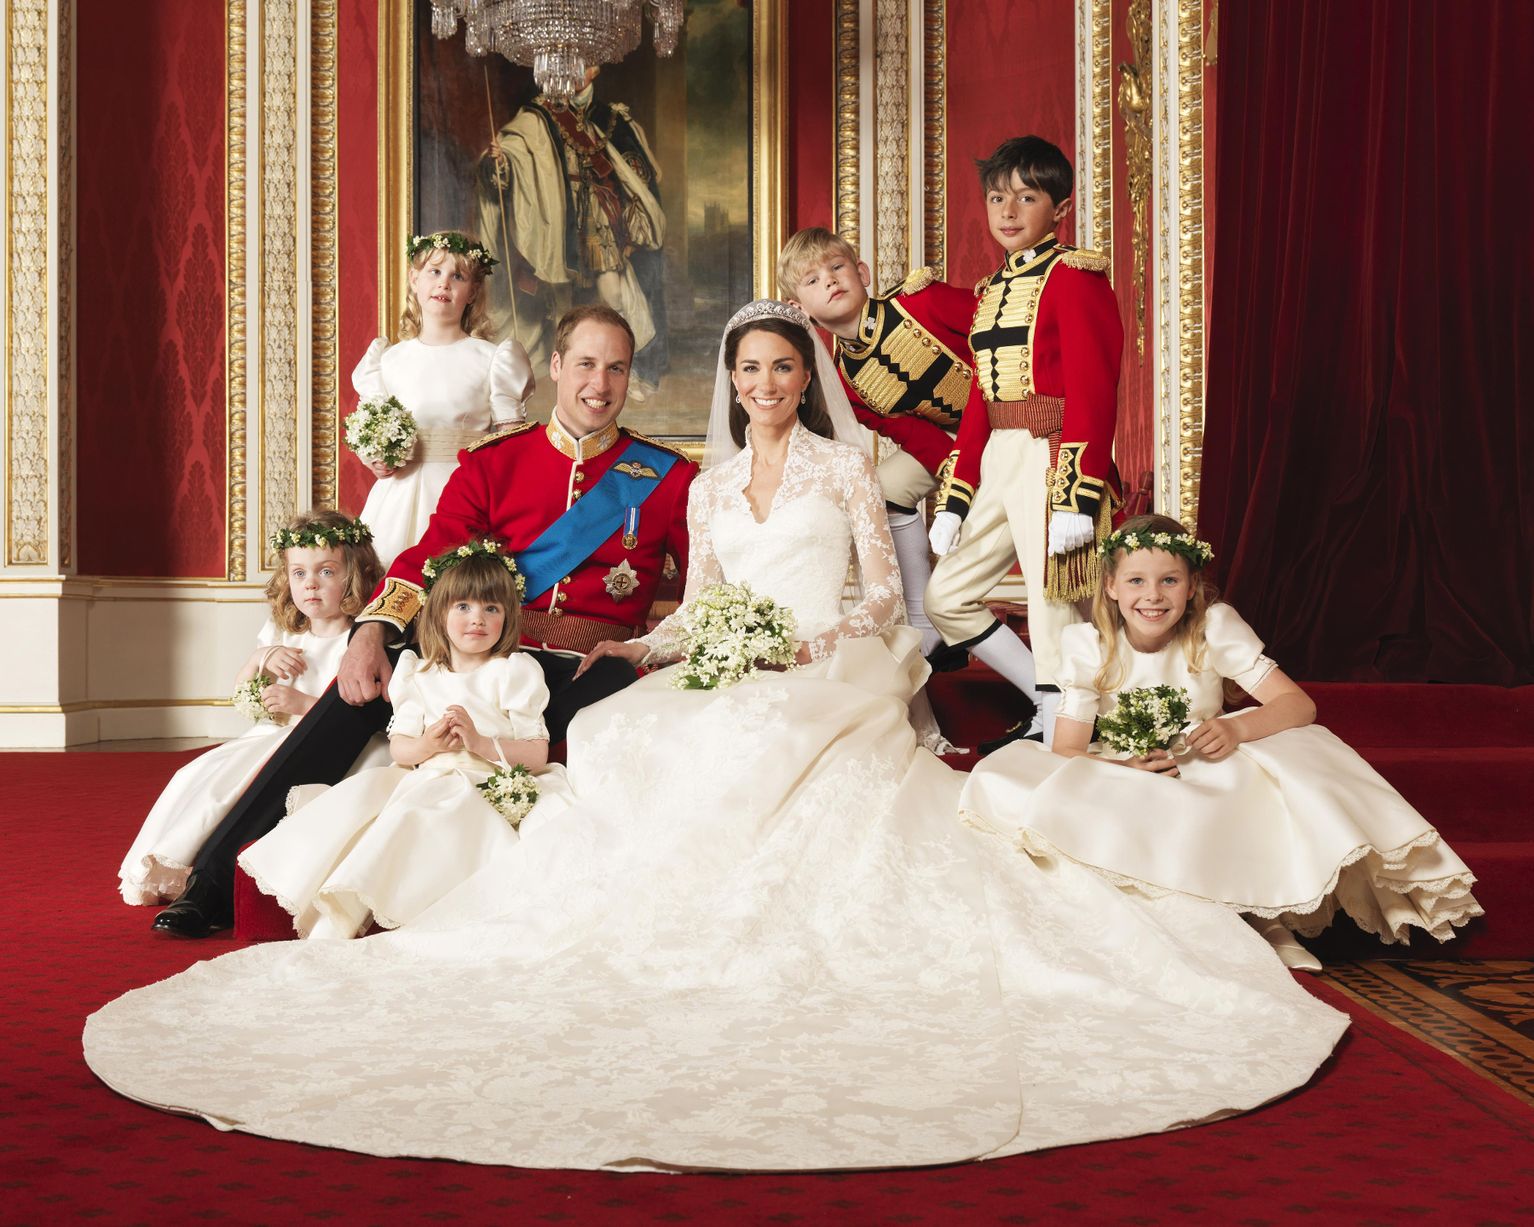 Kate Middleton and Prince William's royal wedding